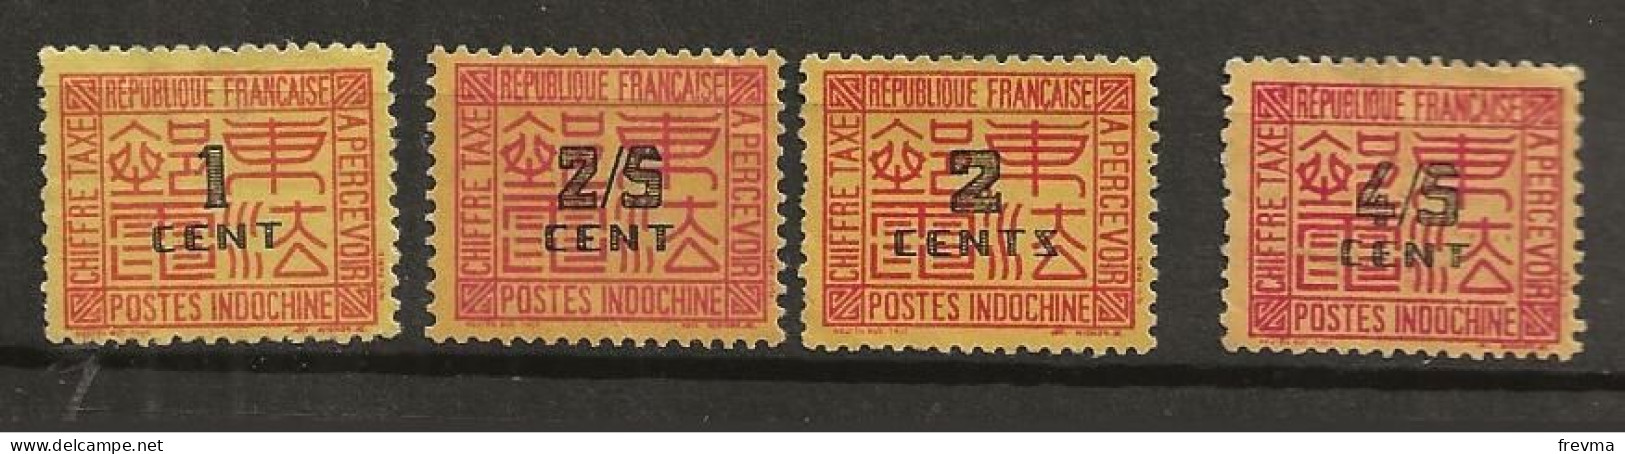 Timbre Poste Indochine Taxe Republique Francaise 1931-1941 - Portomarken